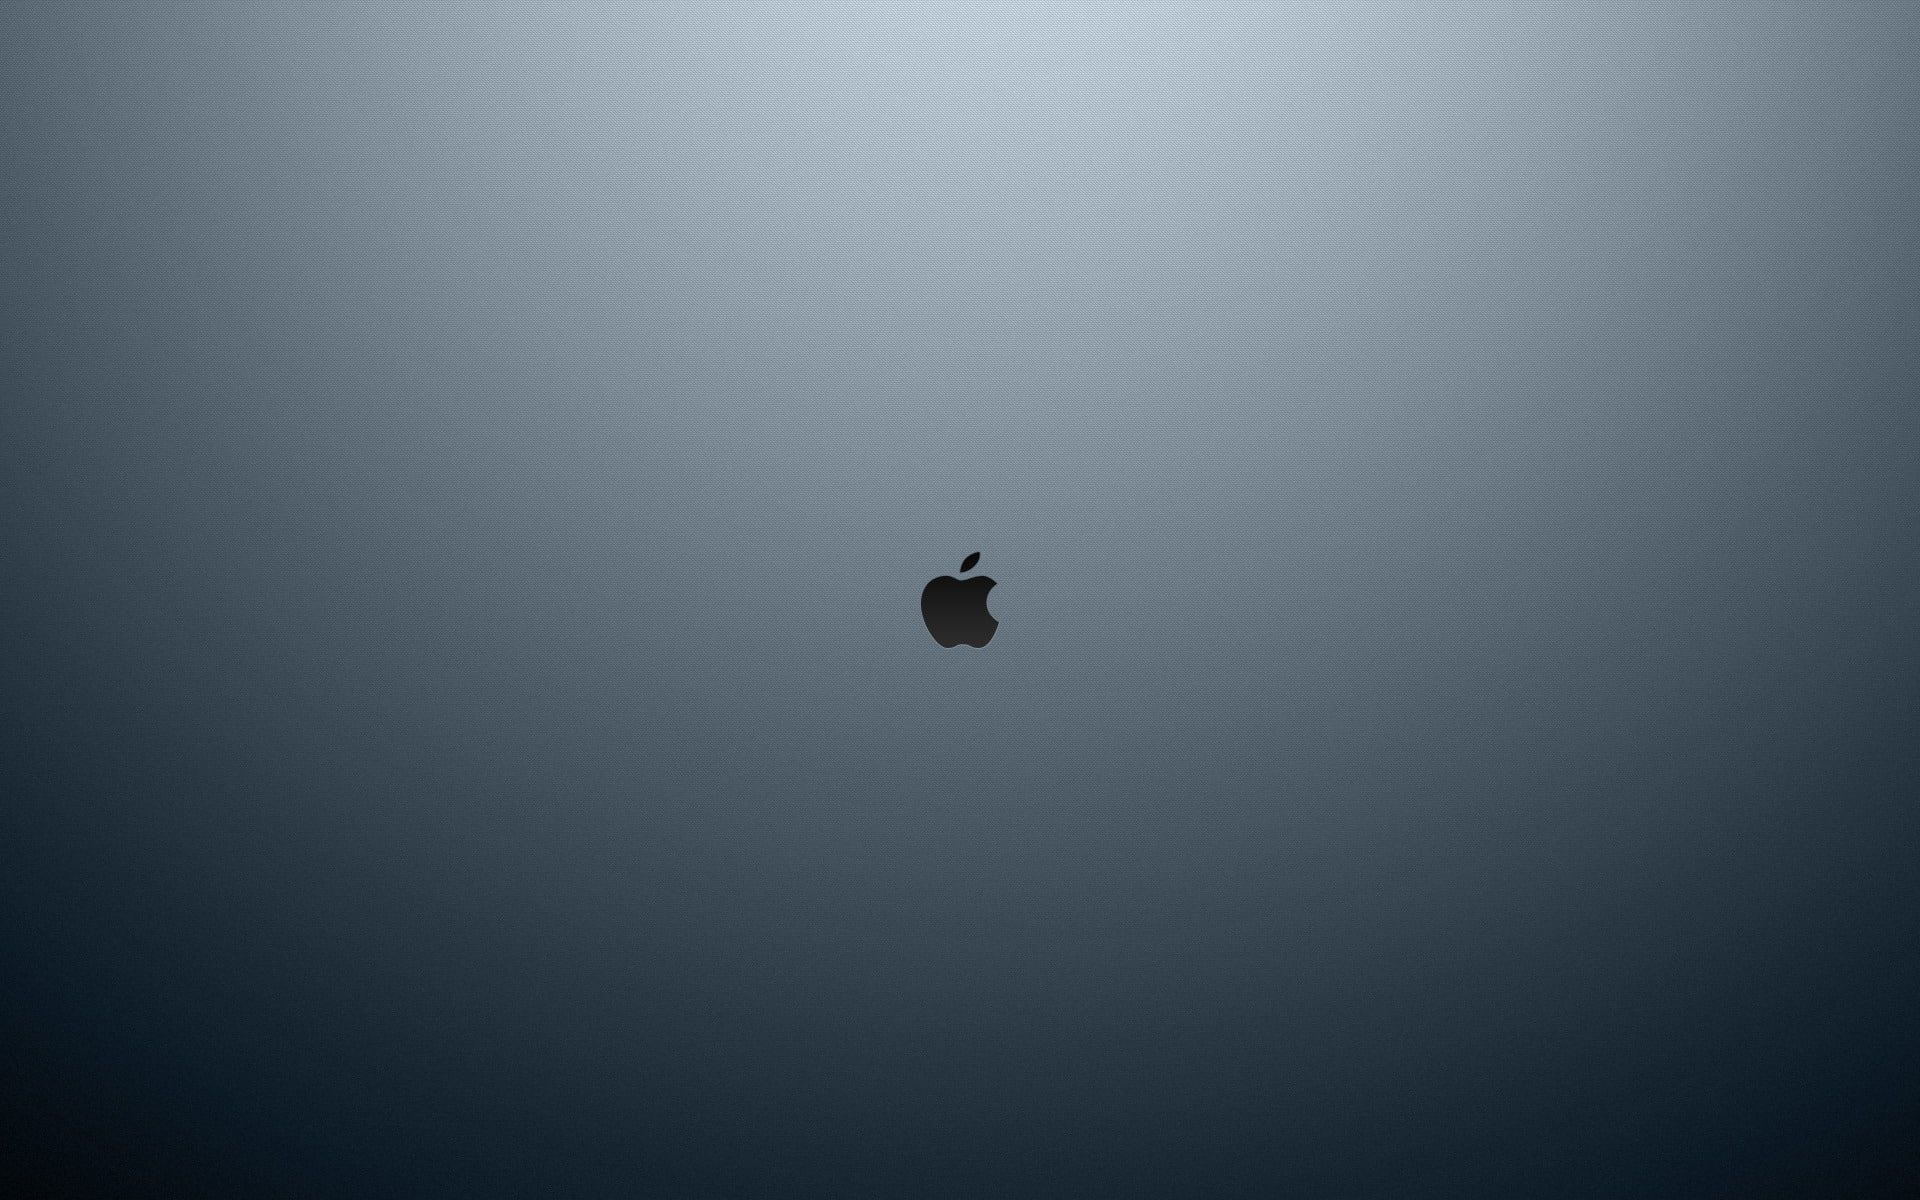 Apple logo apple apple minimalism texture puters grey background texture style puters â apple wallpaper puter wallpaper hd apple logo wallpaper